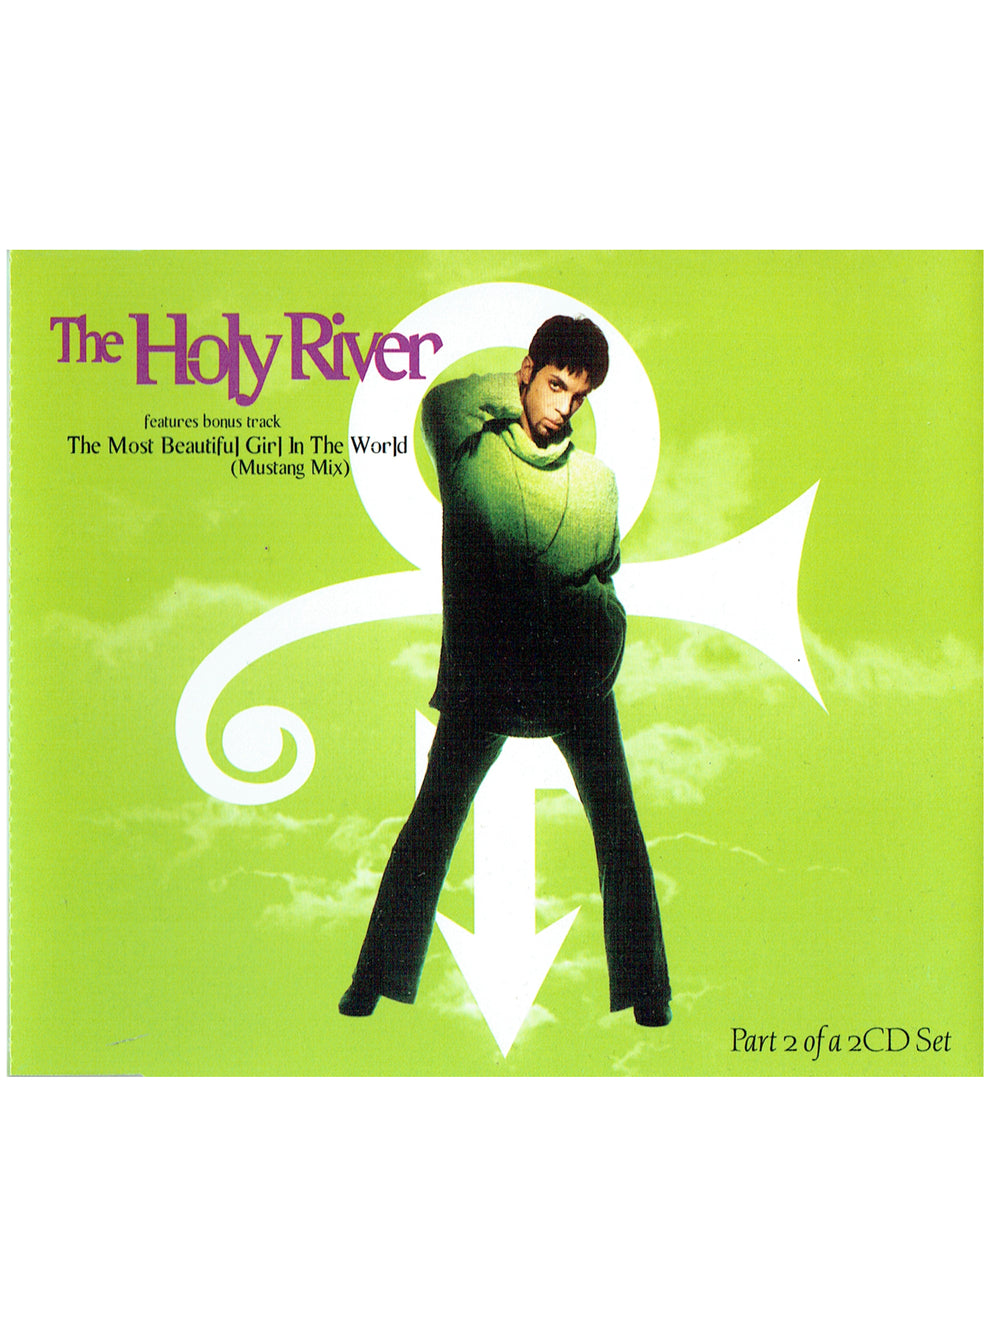 Prince The Holy River Part 2 CD Single 1997 Original 4 Track